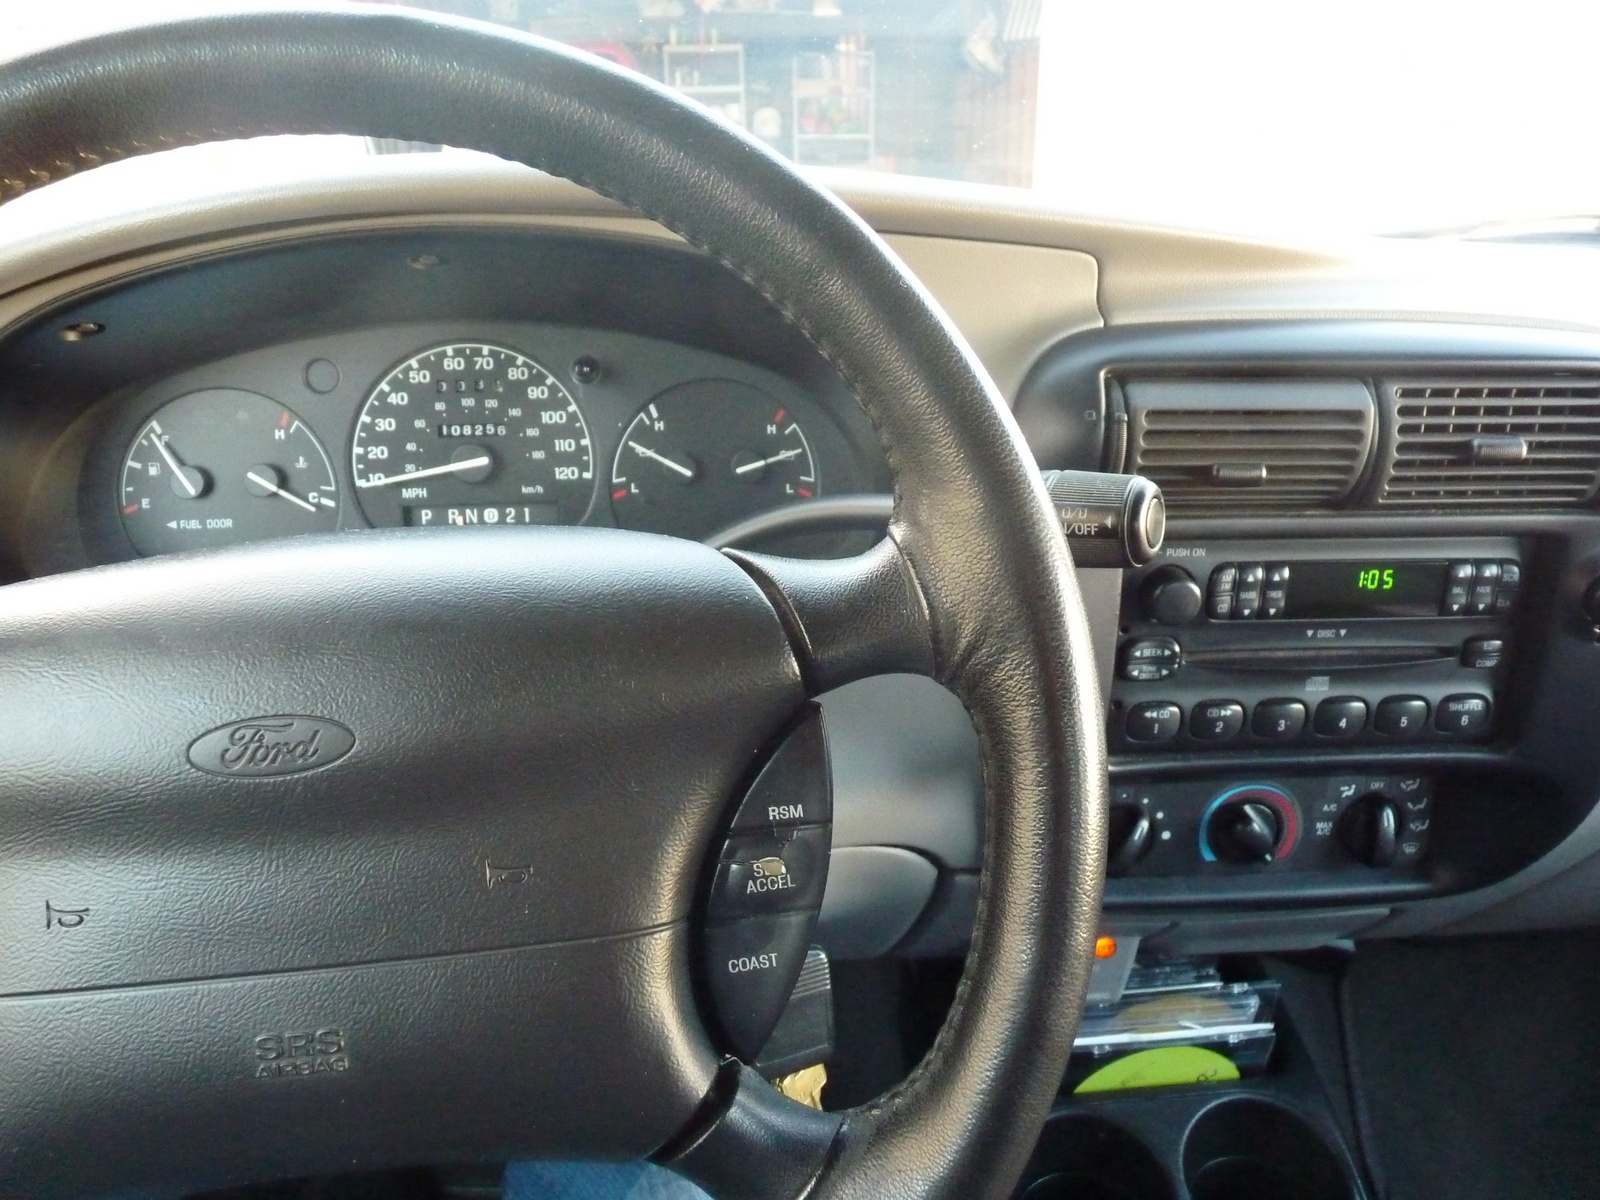 1999 Ford ranger extended cab interior #4